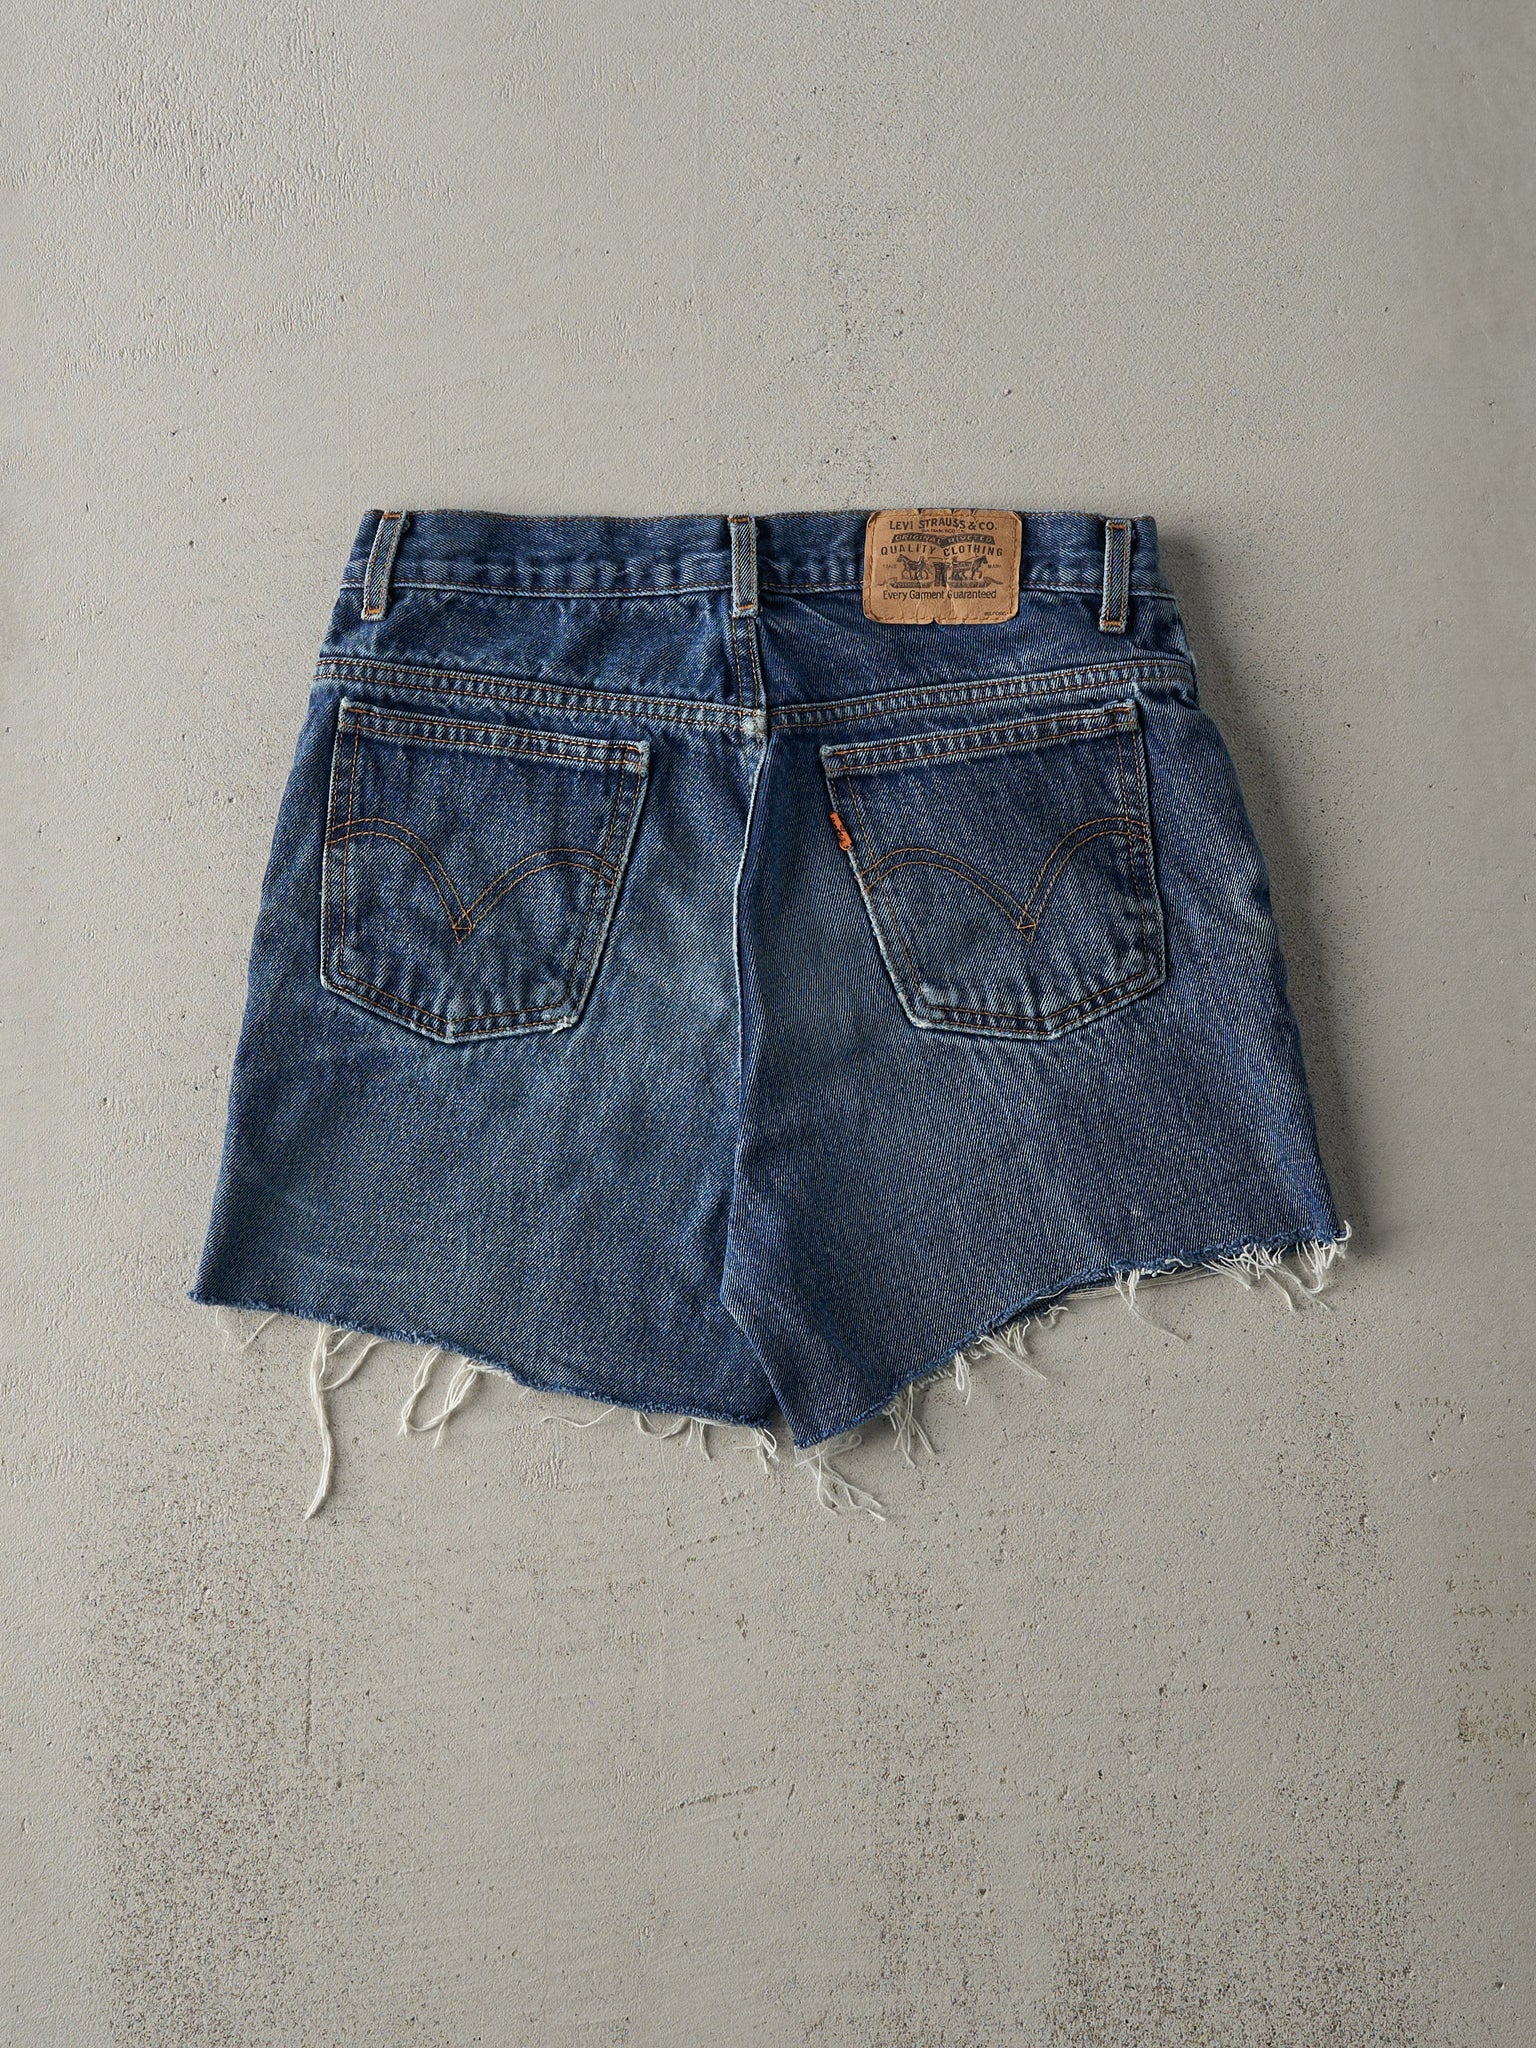 Vintage 90s Dark Wash Levi's Orange Tab Cut Off Jean Shorts (30x4)